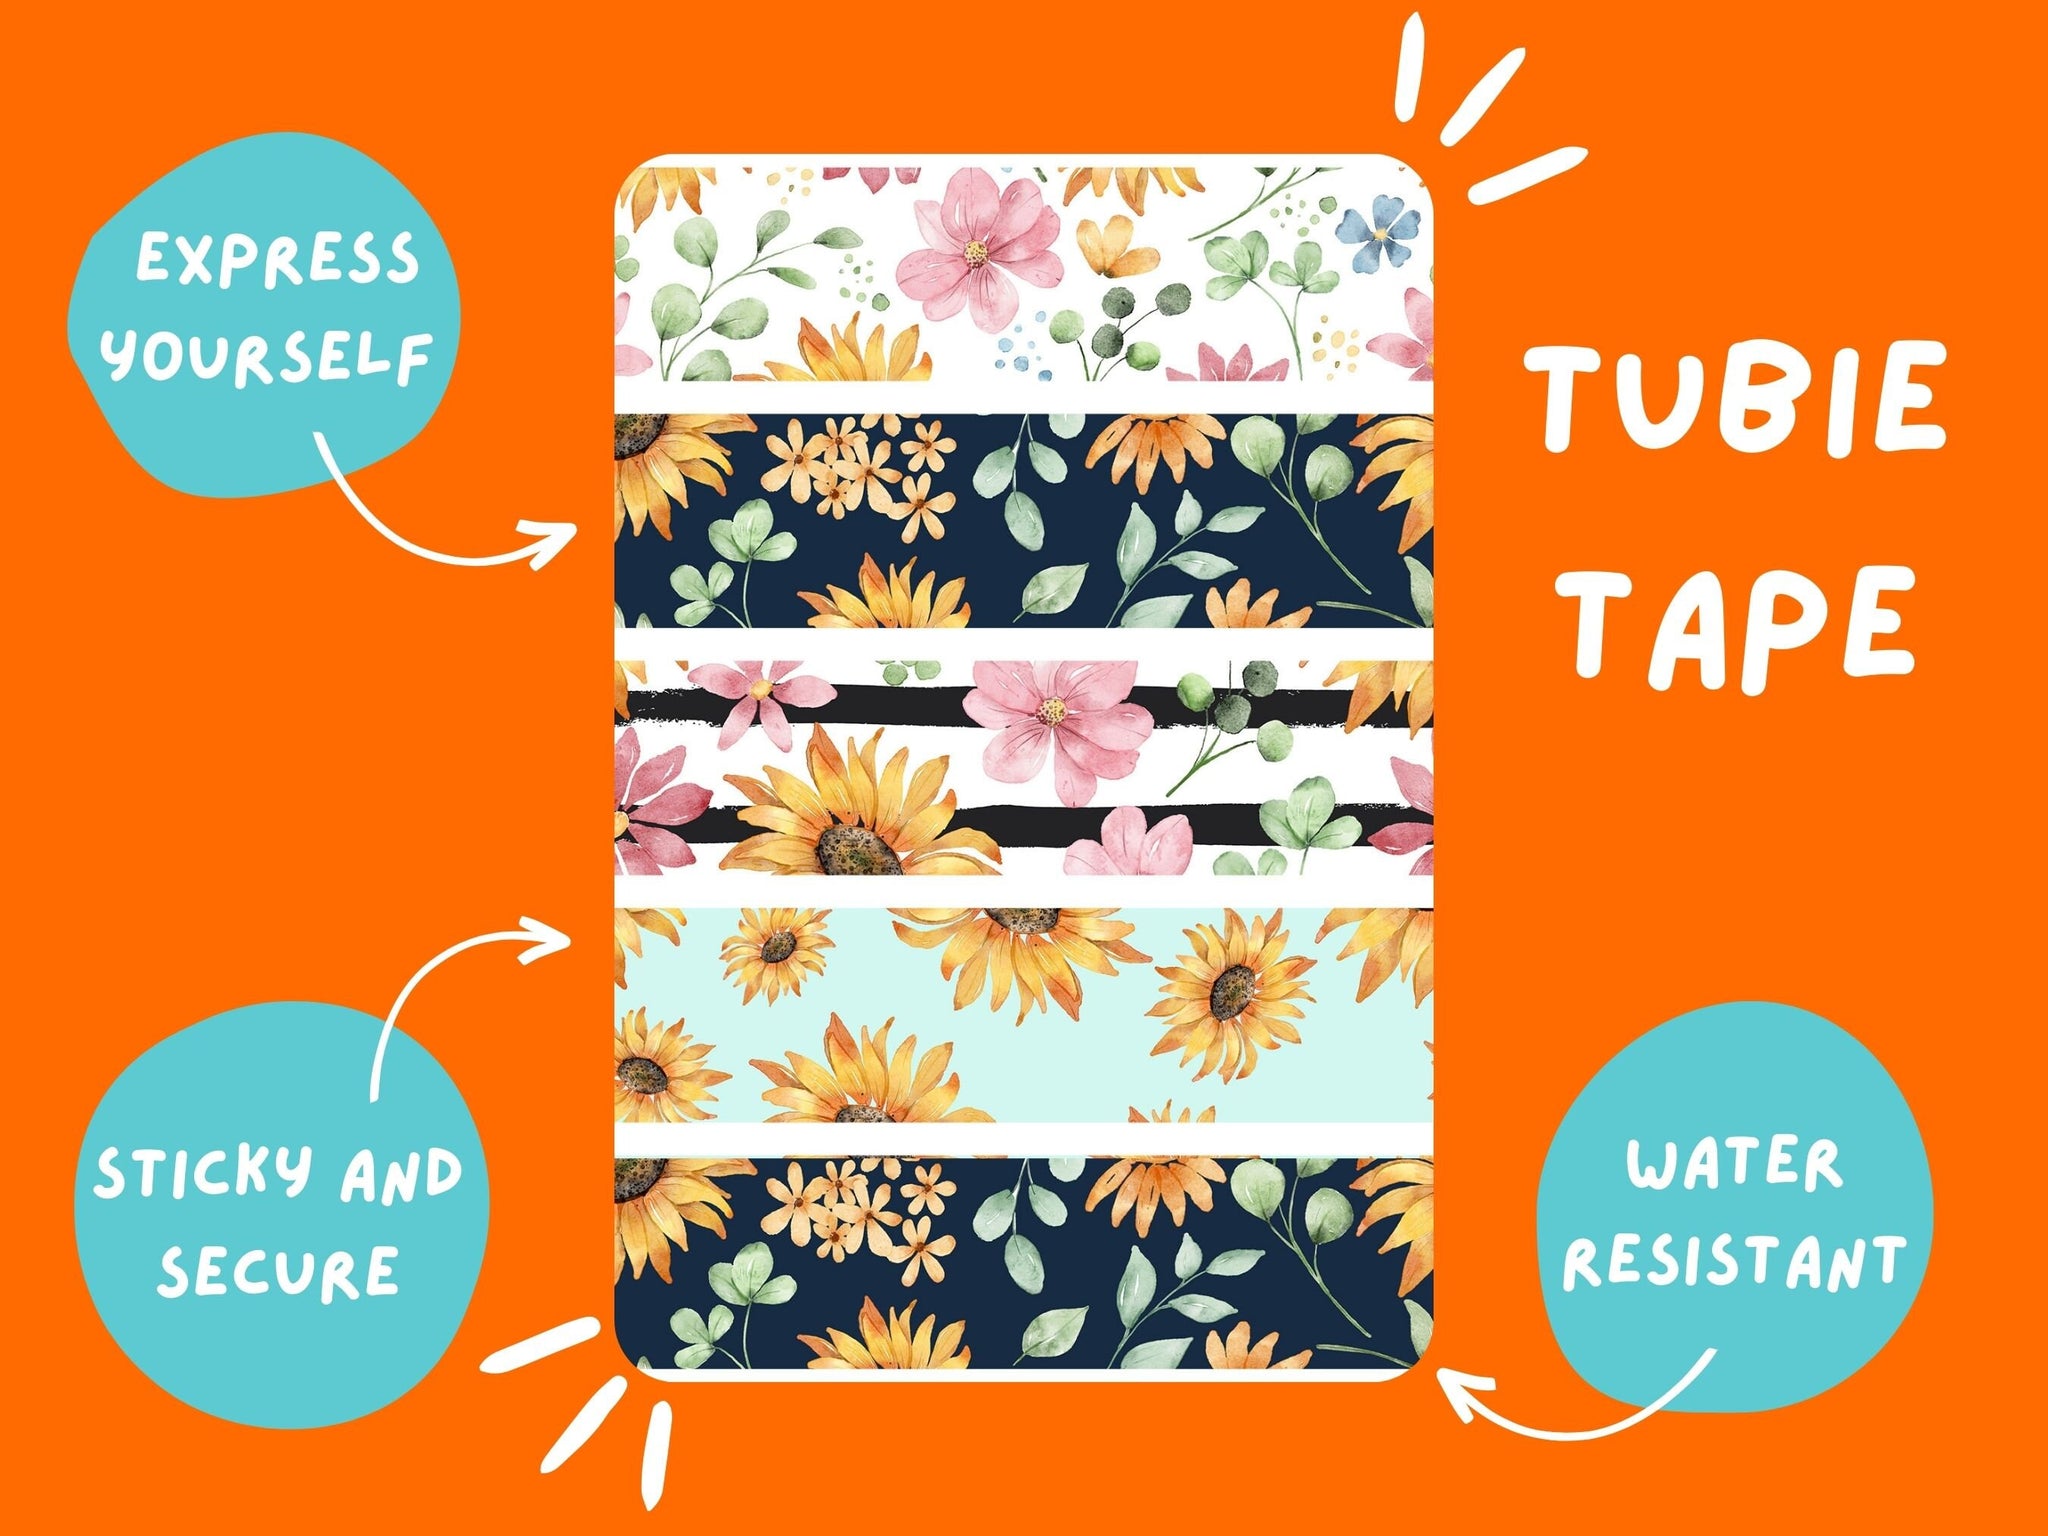 TUBIE TAPE spring sunflower Tubie Life ng tube tape